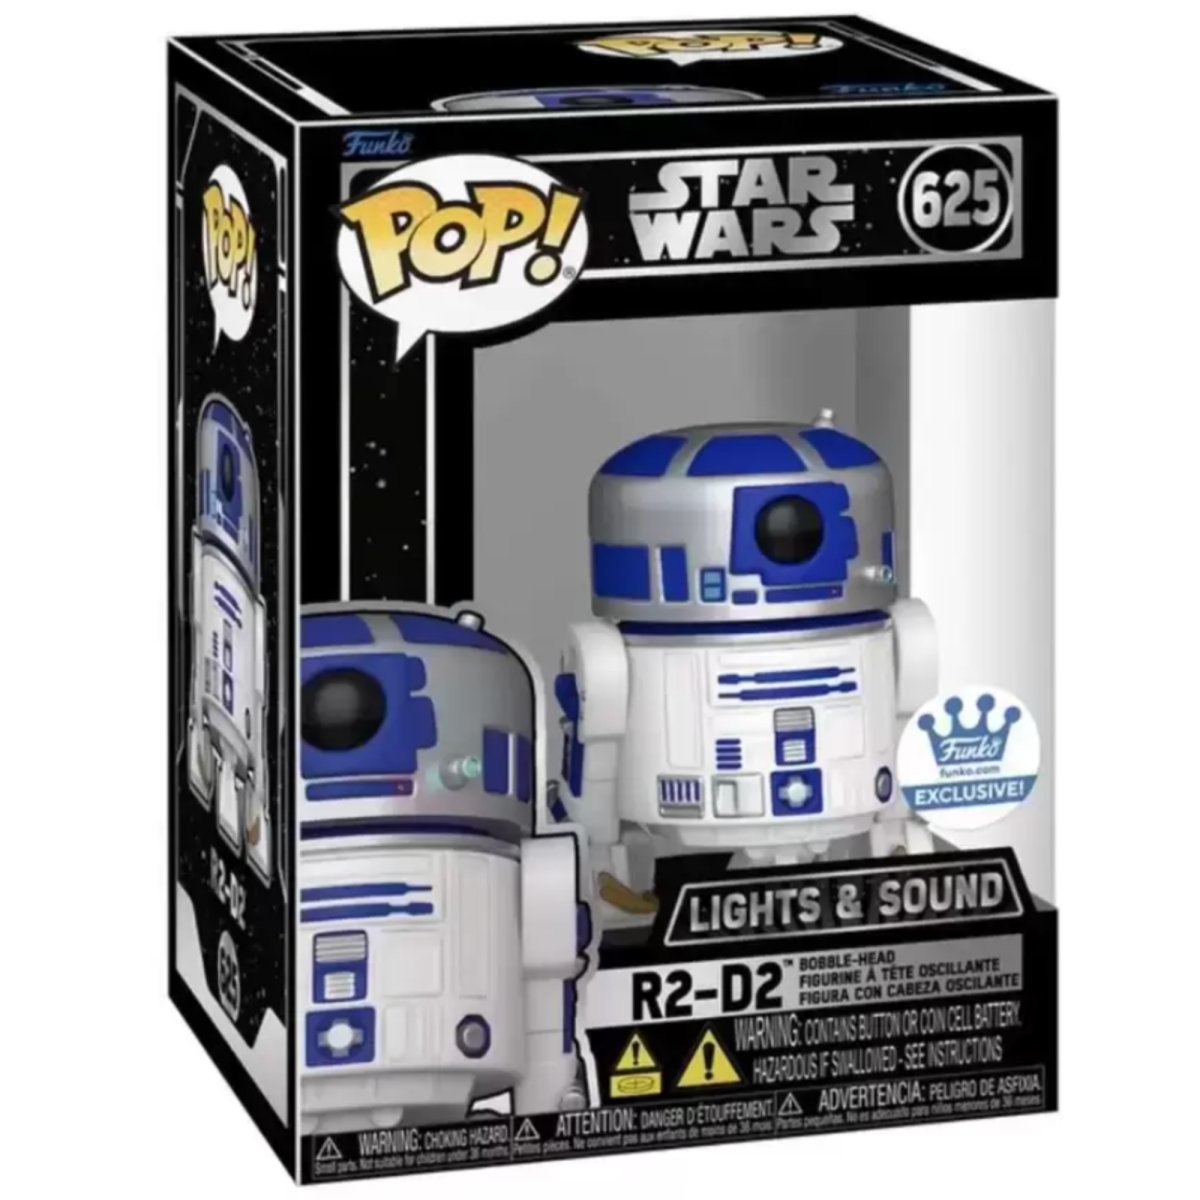 Star Wars - R2-D2 [Lights & Sound] (Funko Shop Exclusive) #625 - Funko Pop! Vinyl Star Wars - Persona Toys